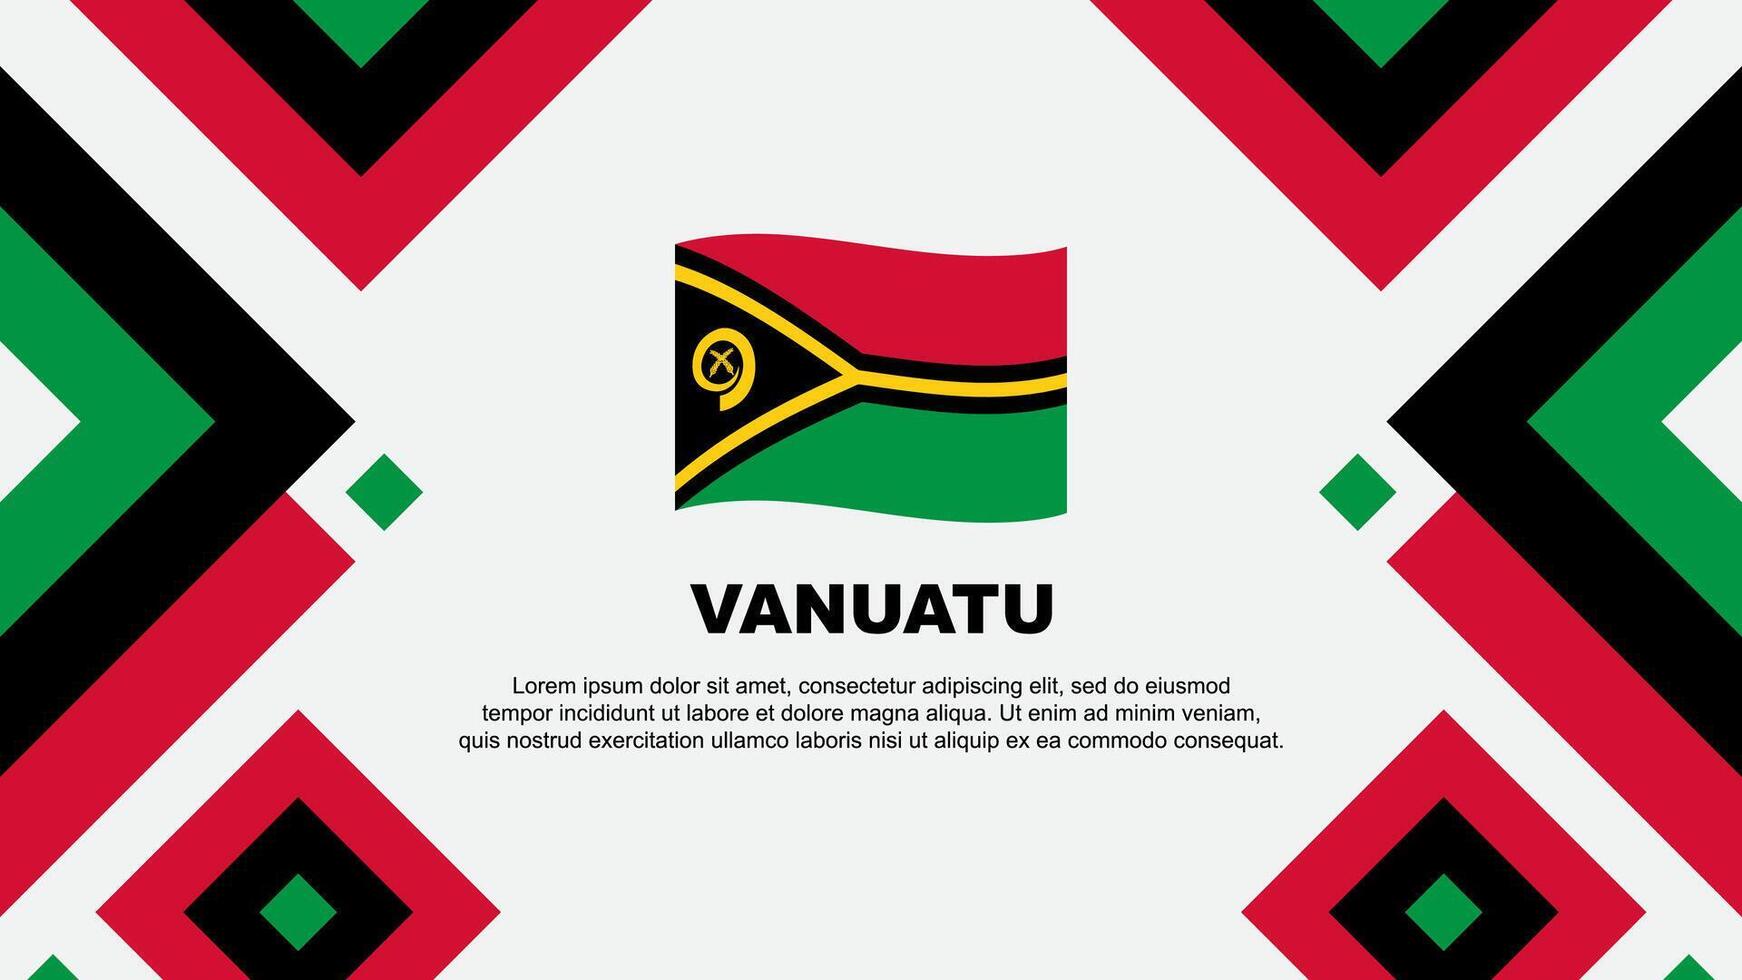 Vanuatu Flag Abstract Background Design Template. Vanuatu Independence Day Banner Wallpaper Vector Illustration. Vanuatu Template